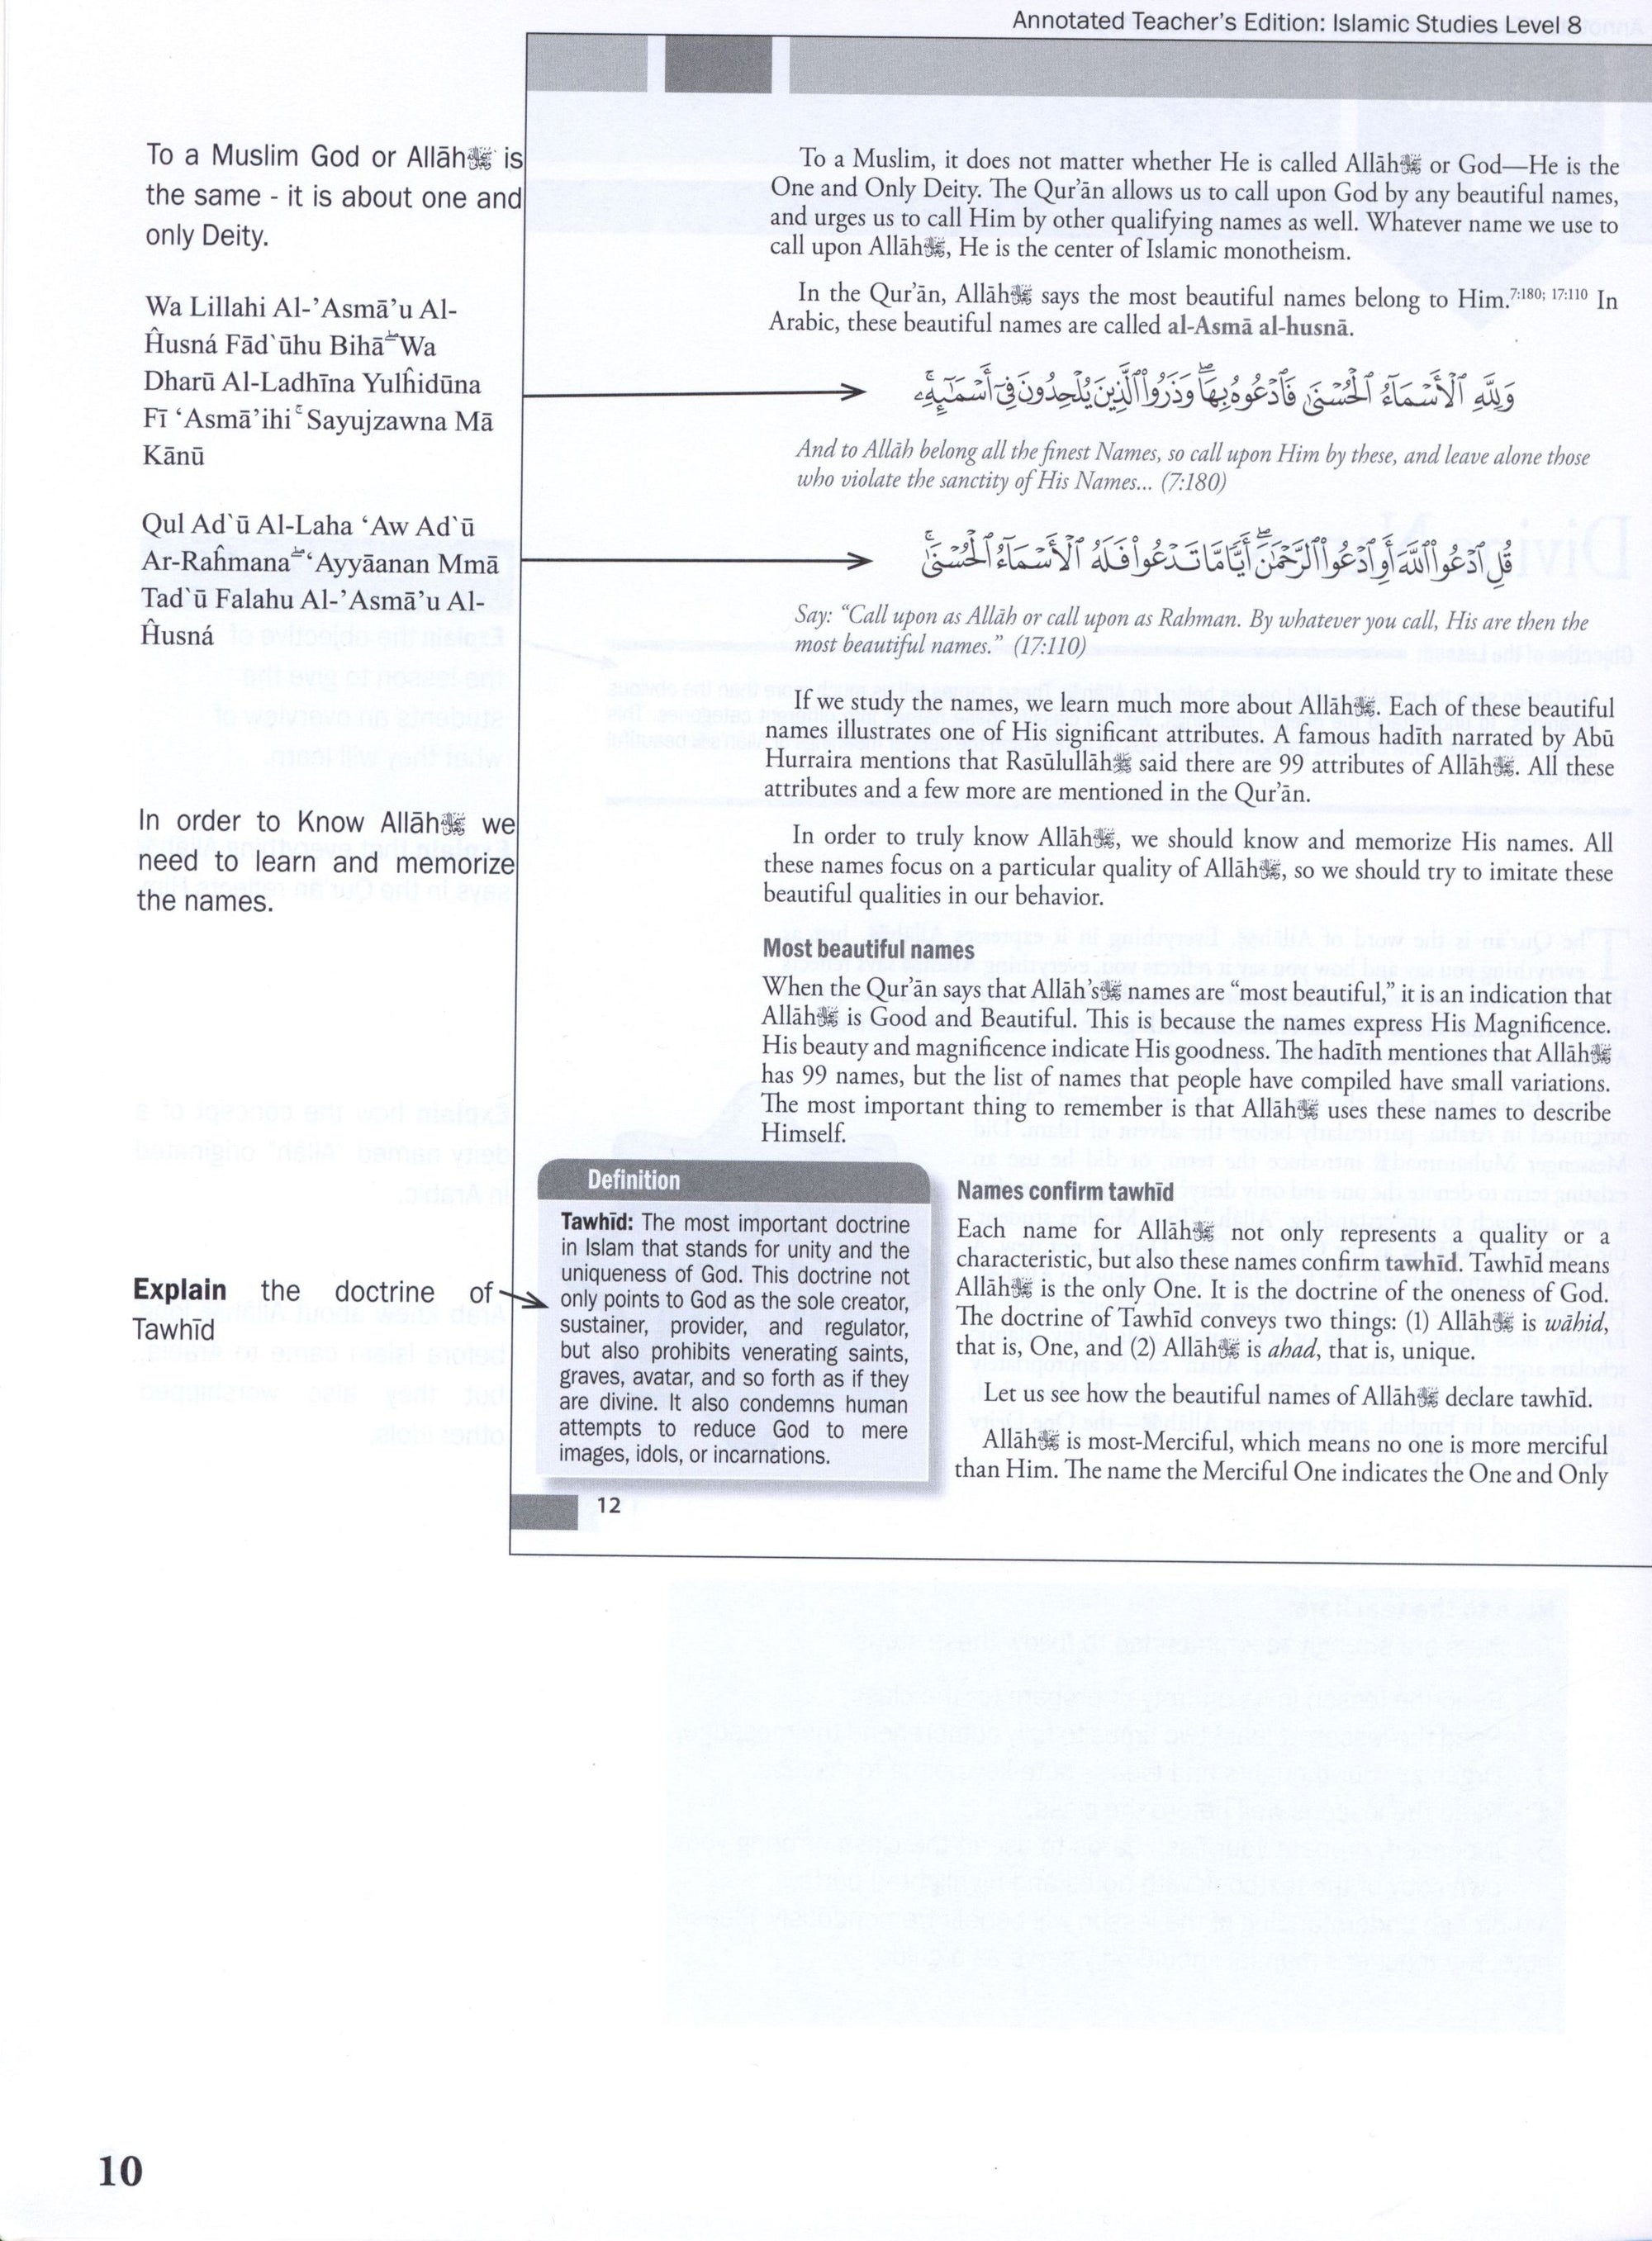 Weekend Learning Islamic Studies Teacher Manual Level 8